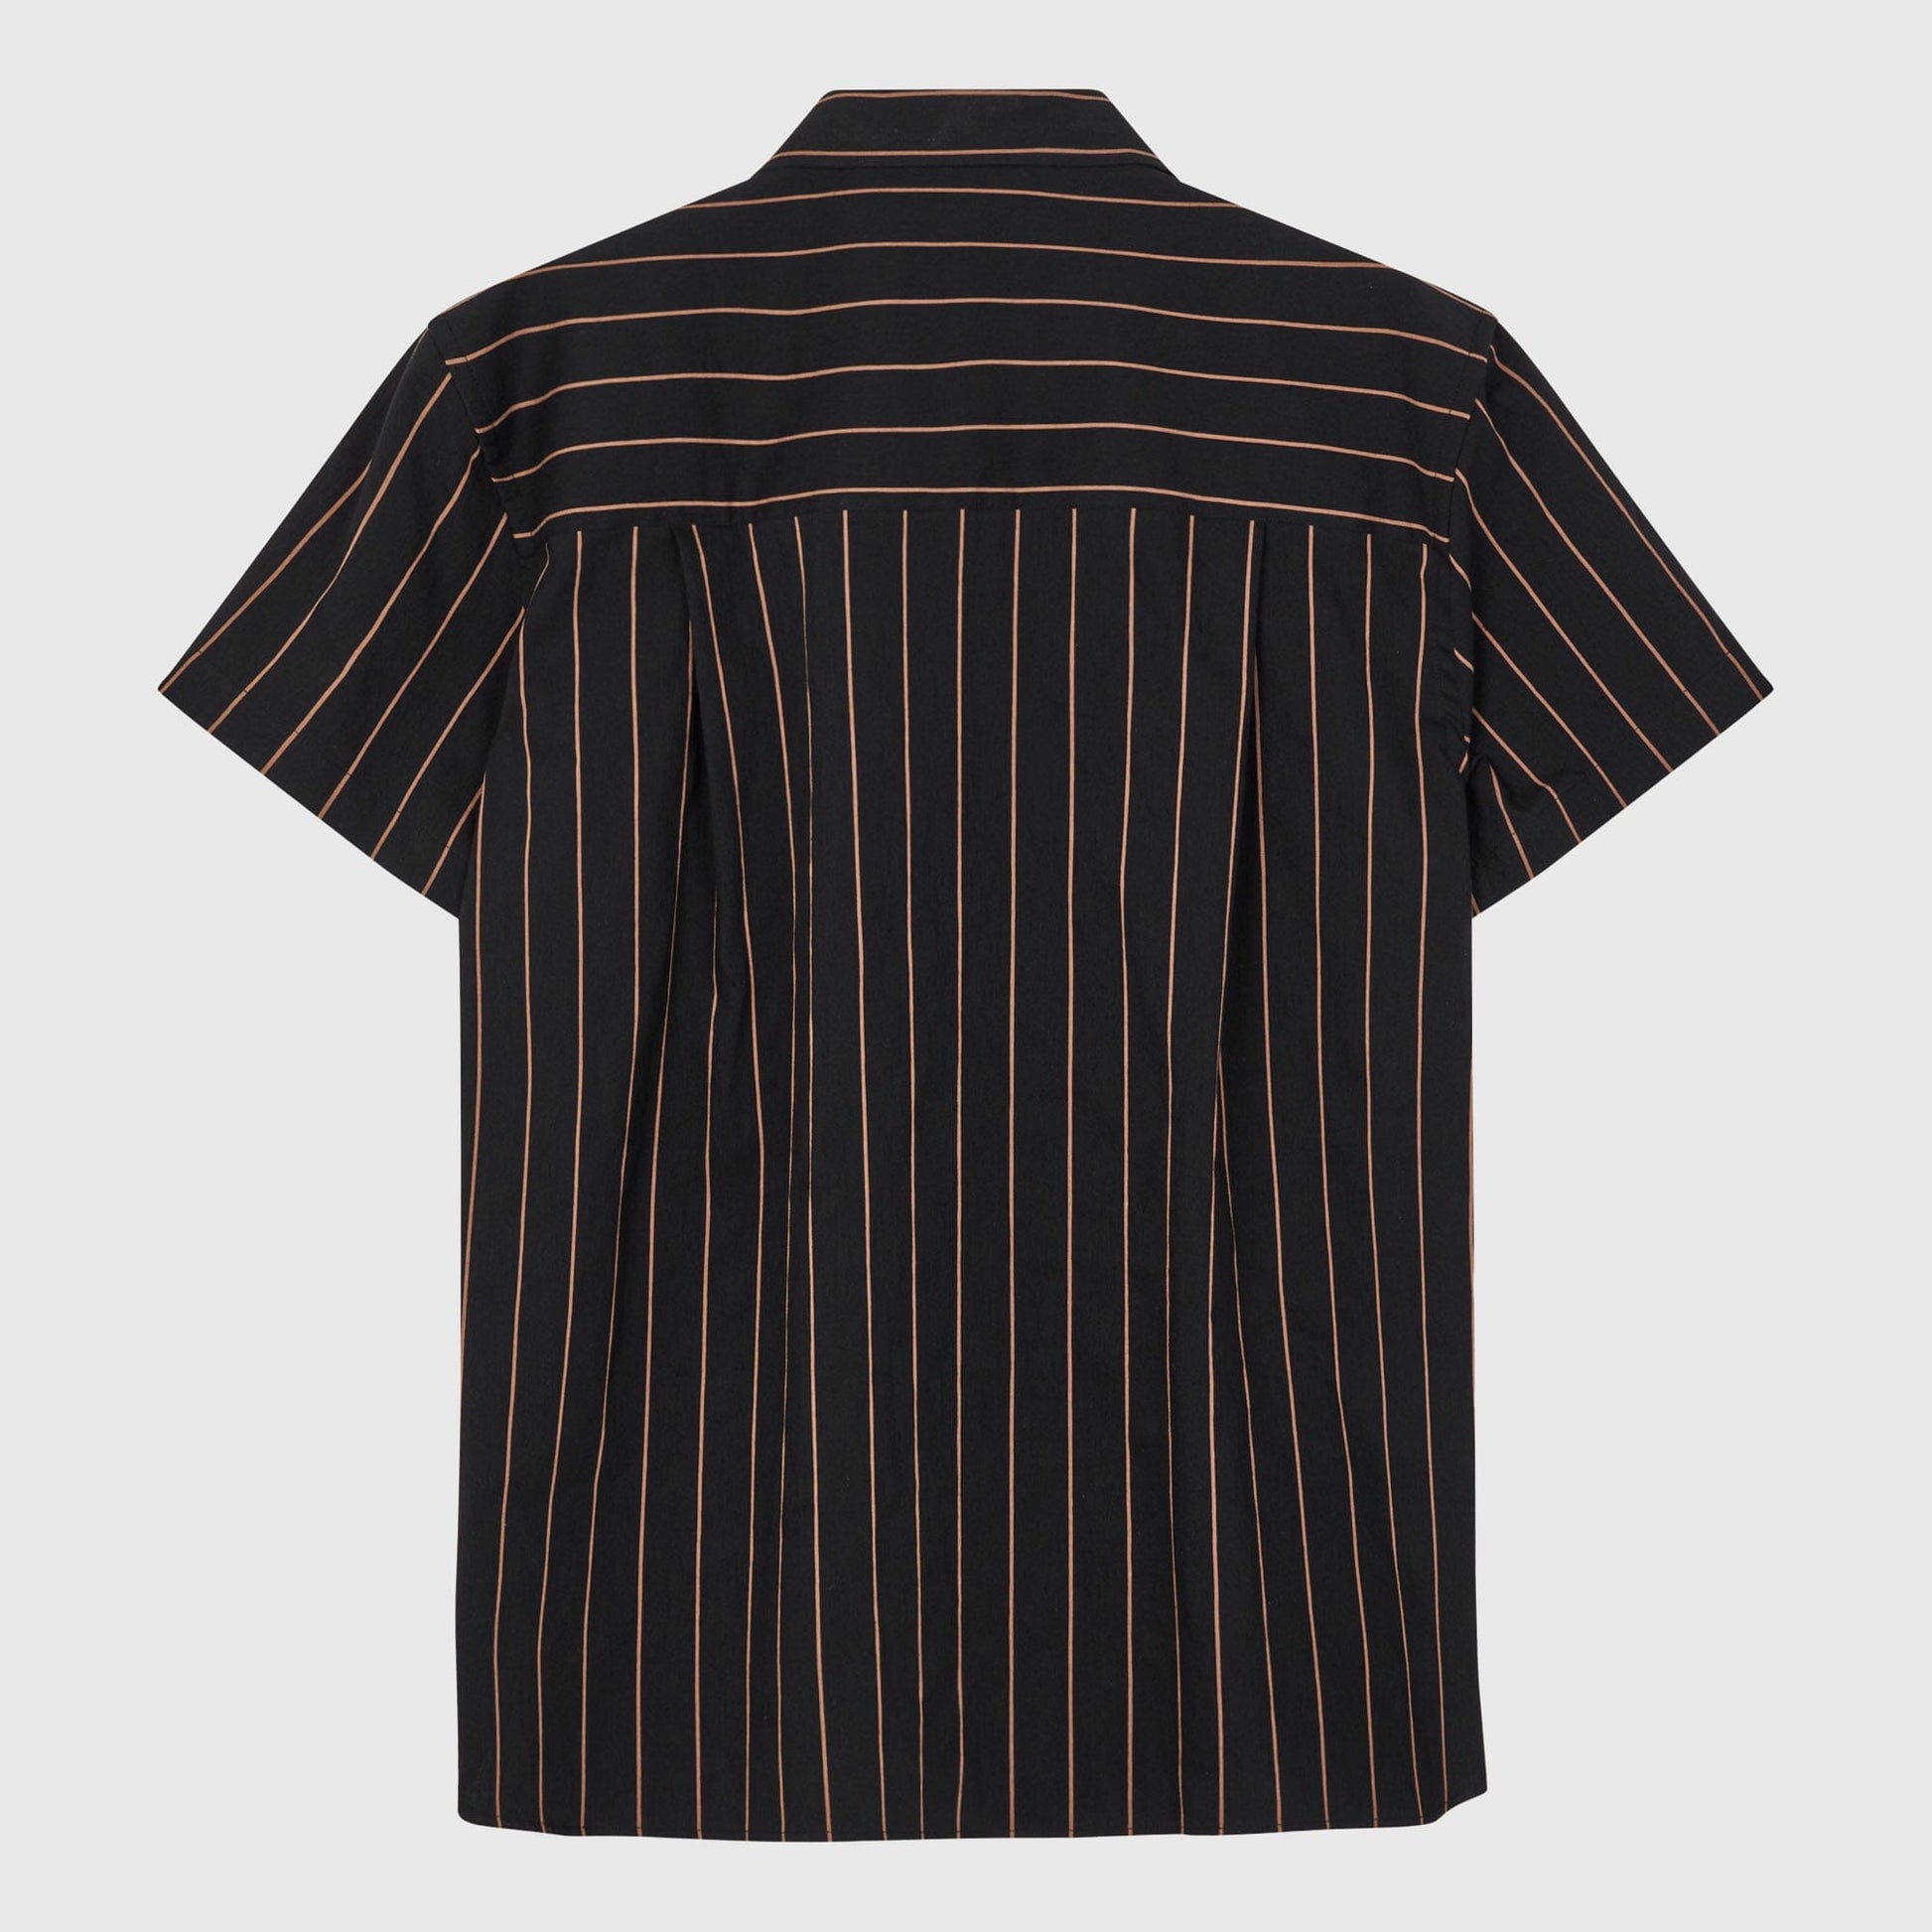 Libertine-Libertine Carbon Shirt - Khaki Stripe Shirt Libertine-Libertine 